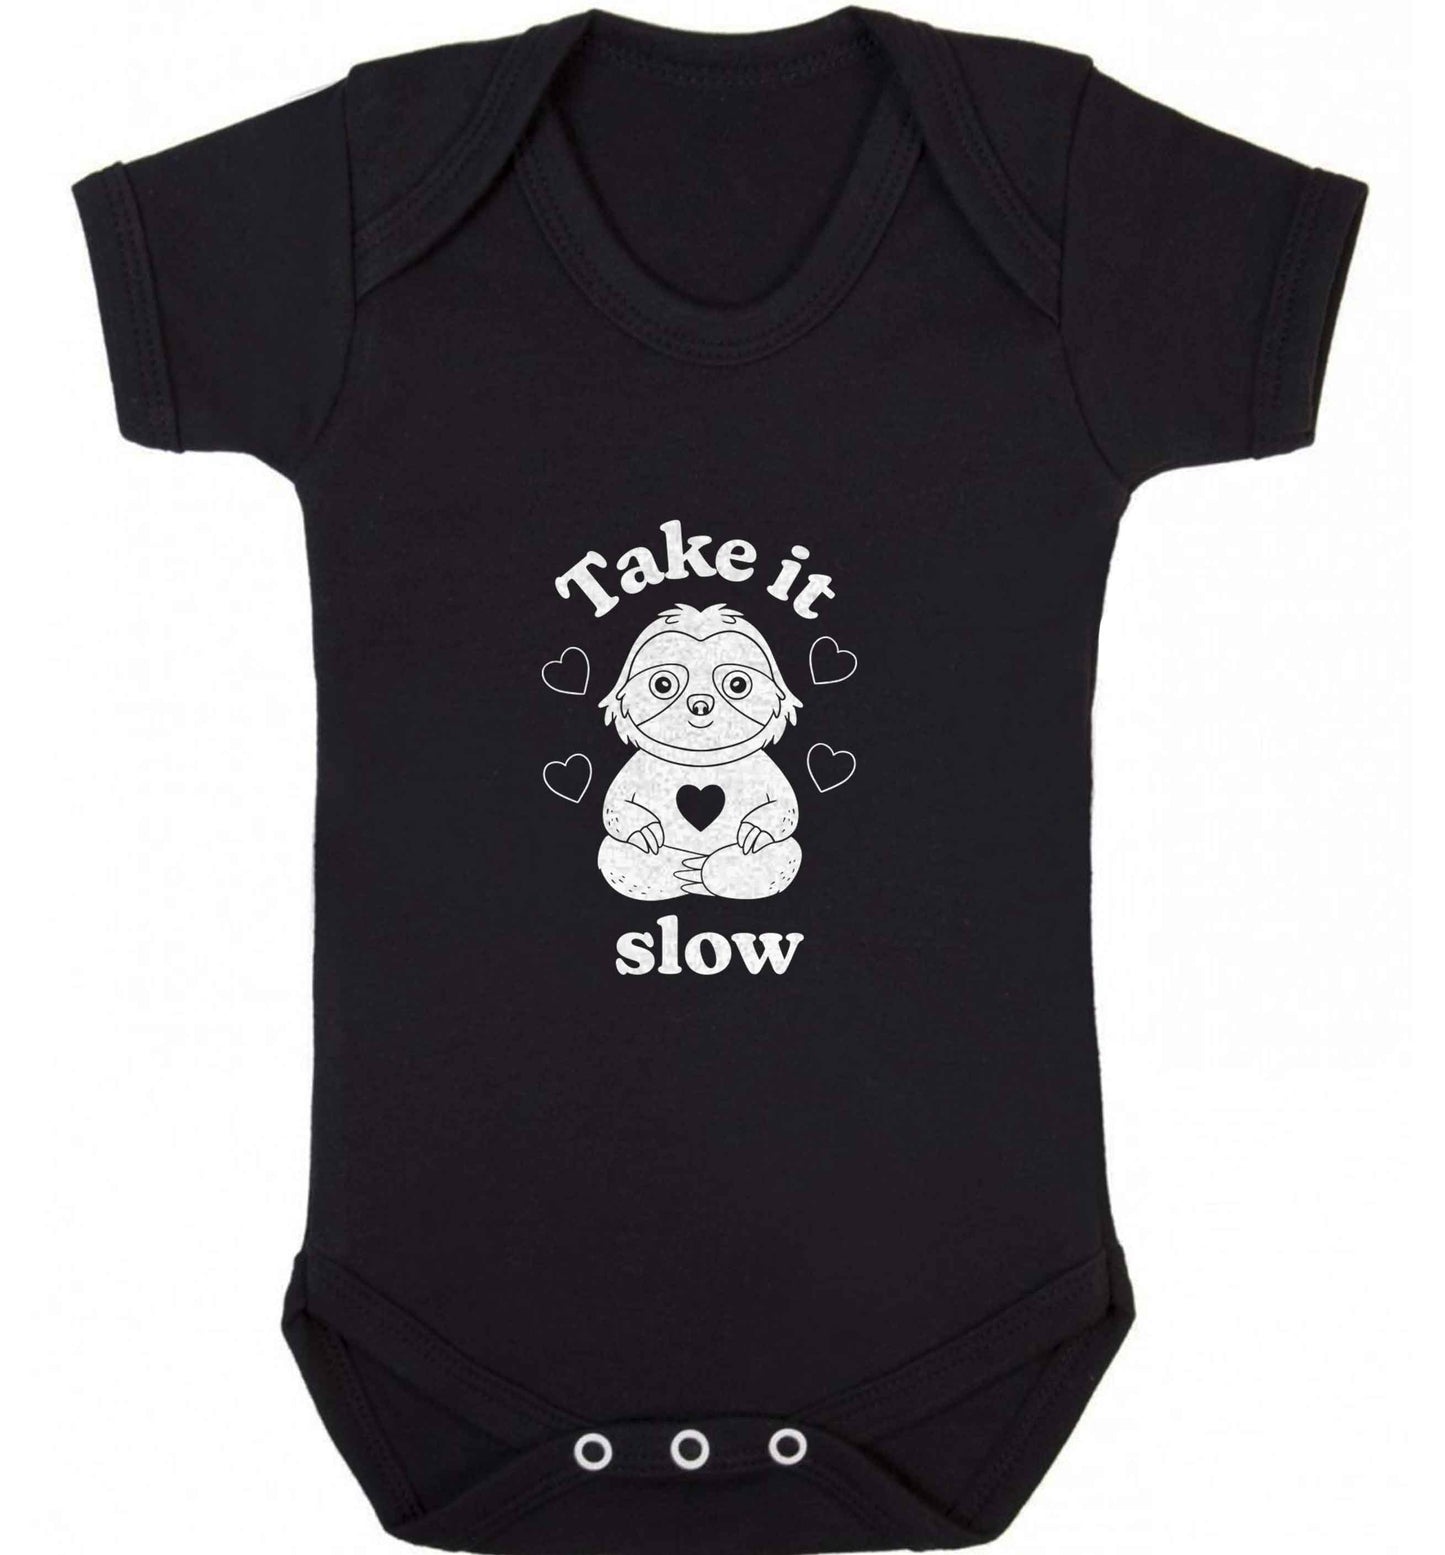 Take it slow baby vest black 18-24 months